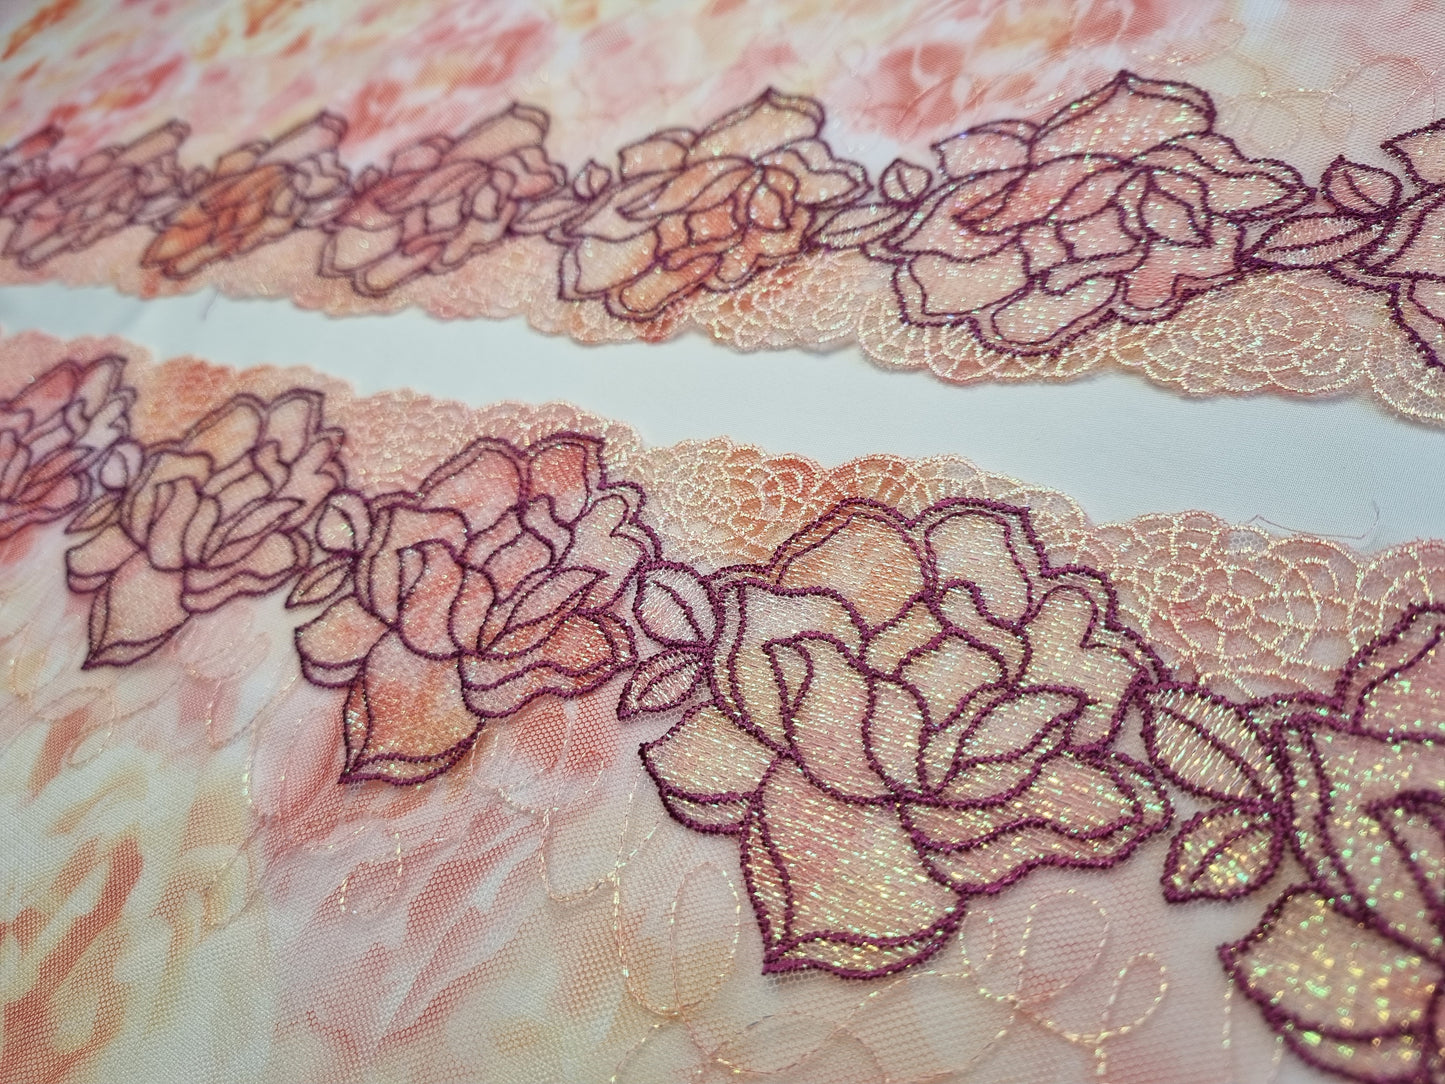 Tule kant met print en parelmoer kleurige rozen.